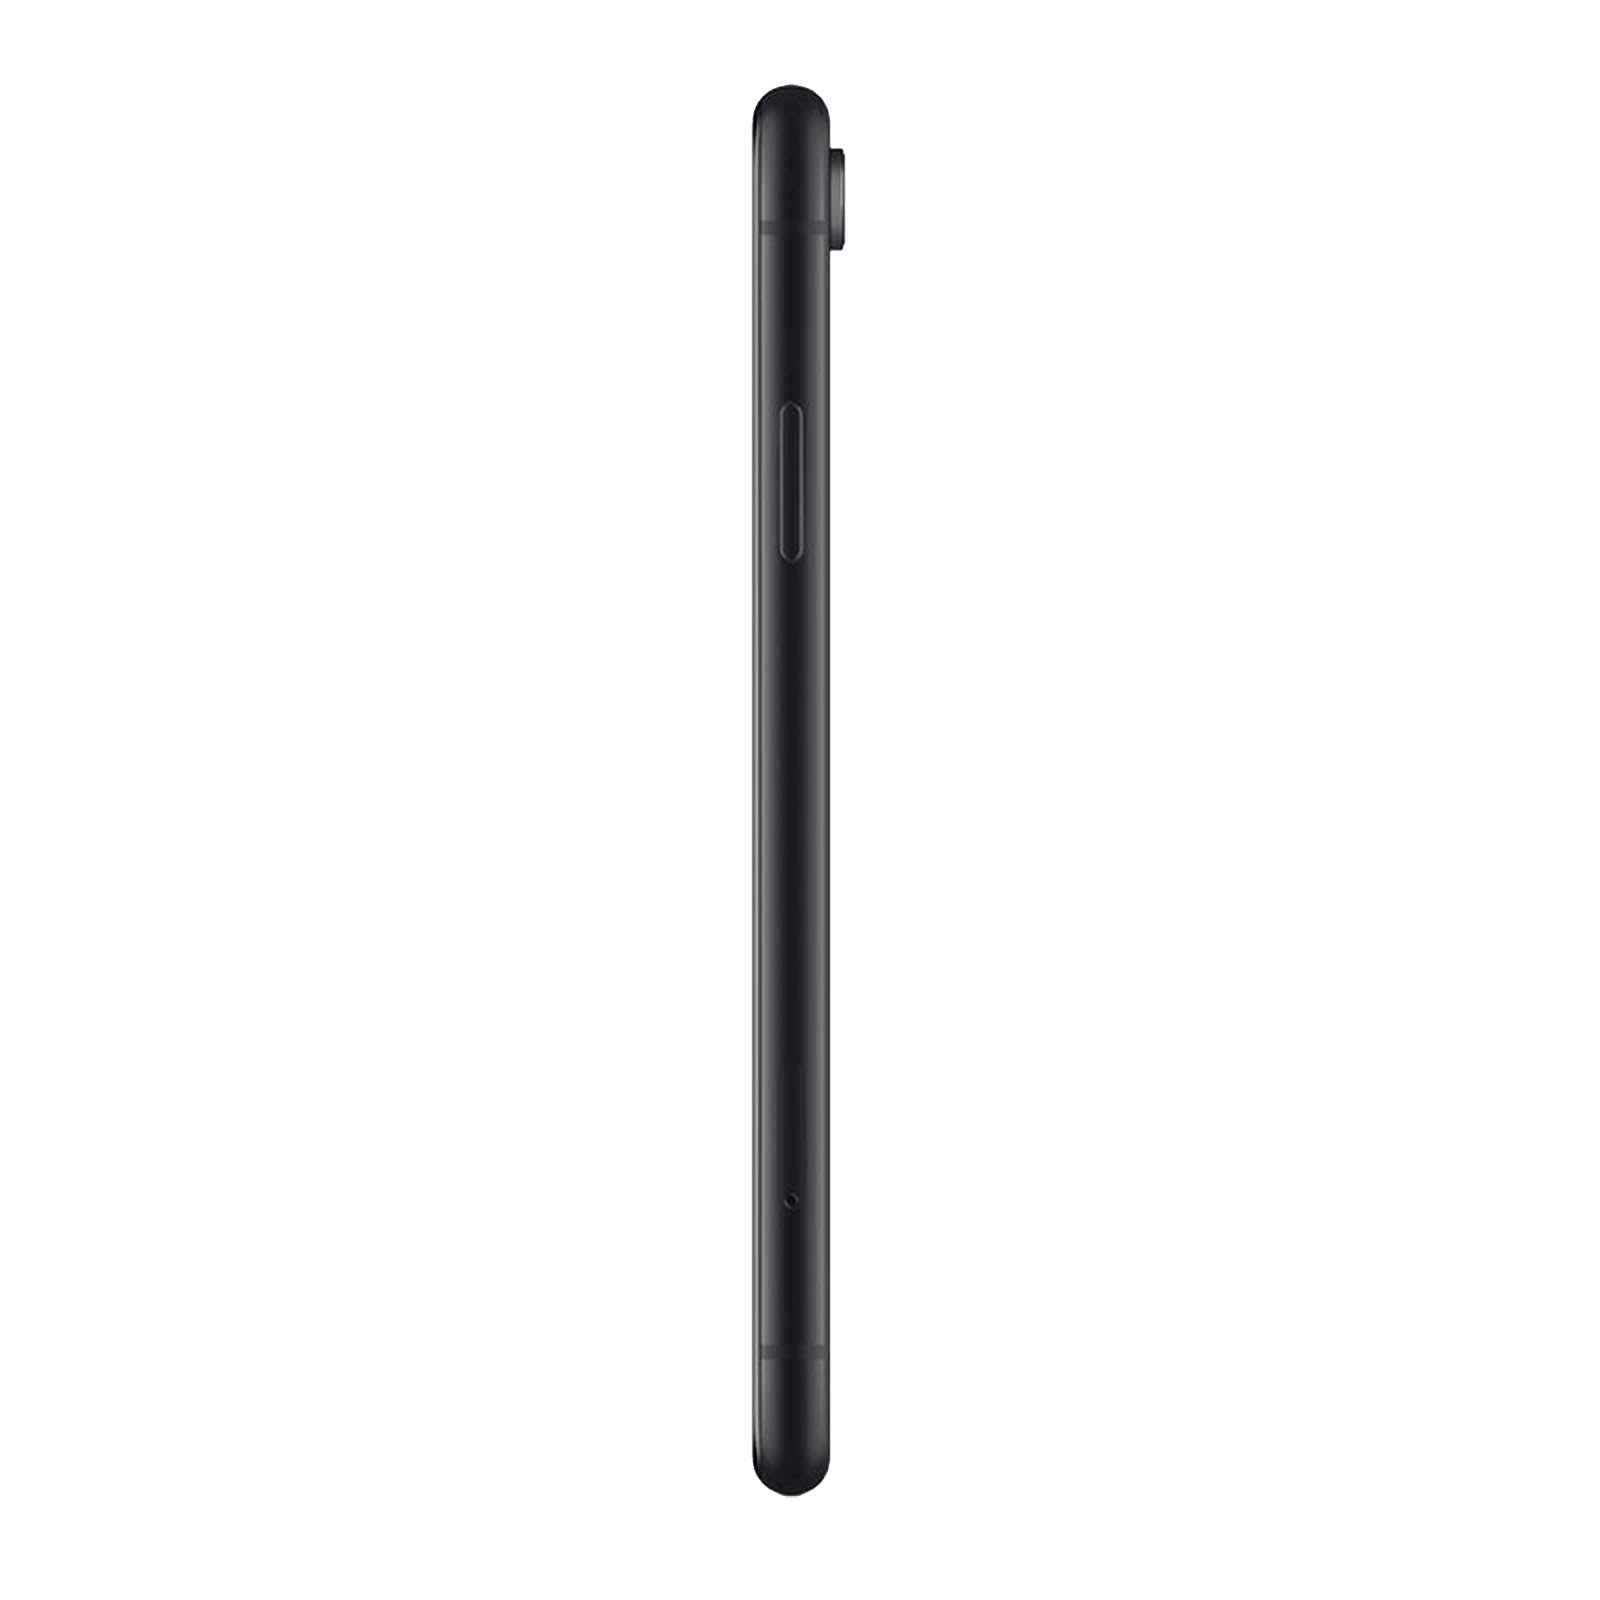 Apple iPhone XR 256GB Black Good - Verizon